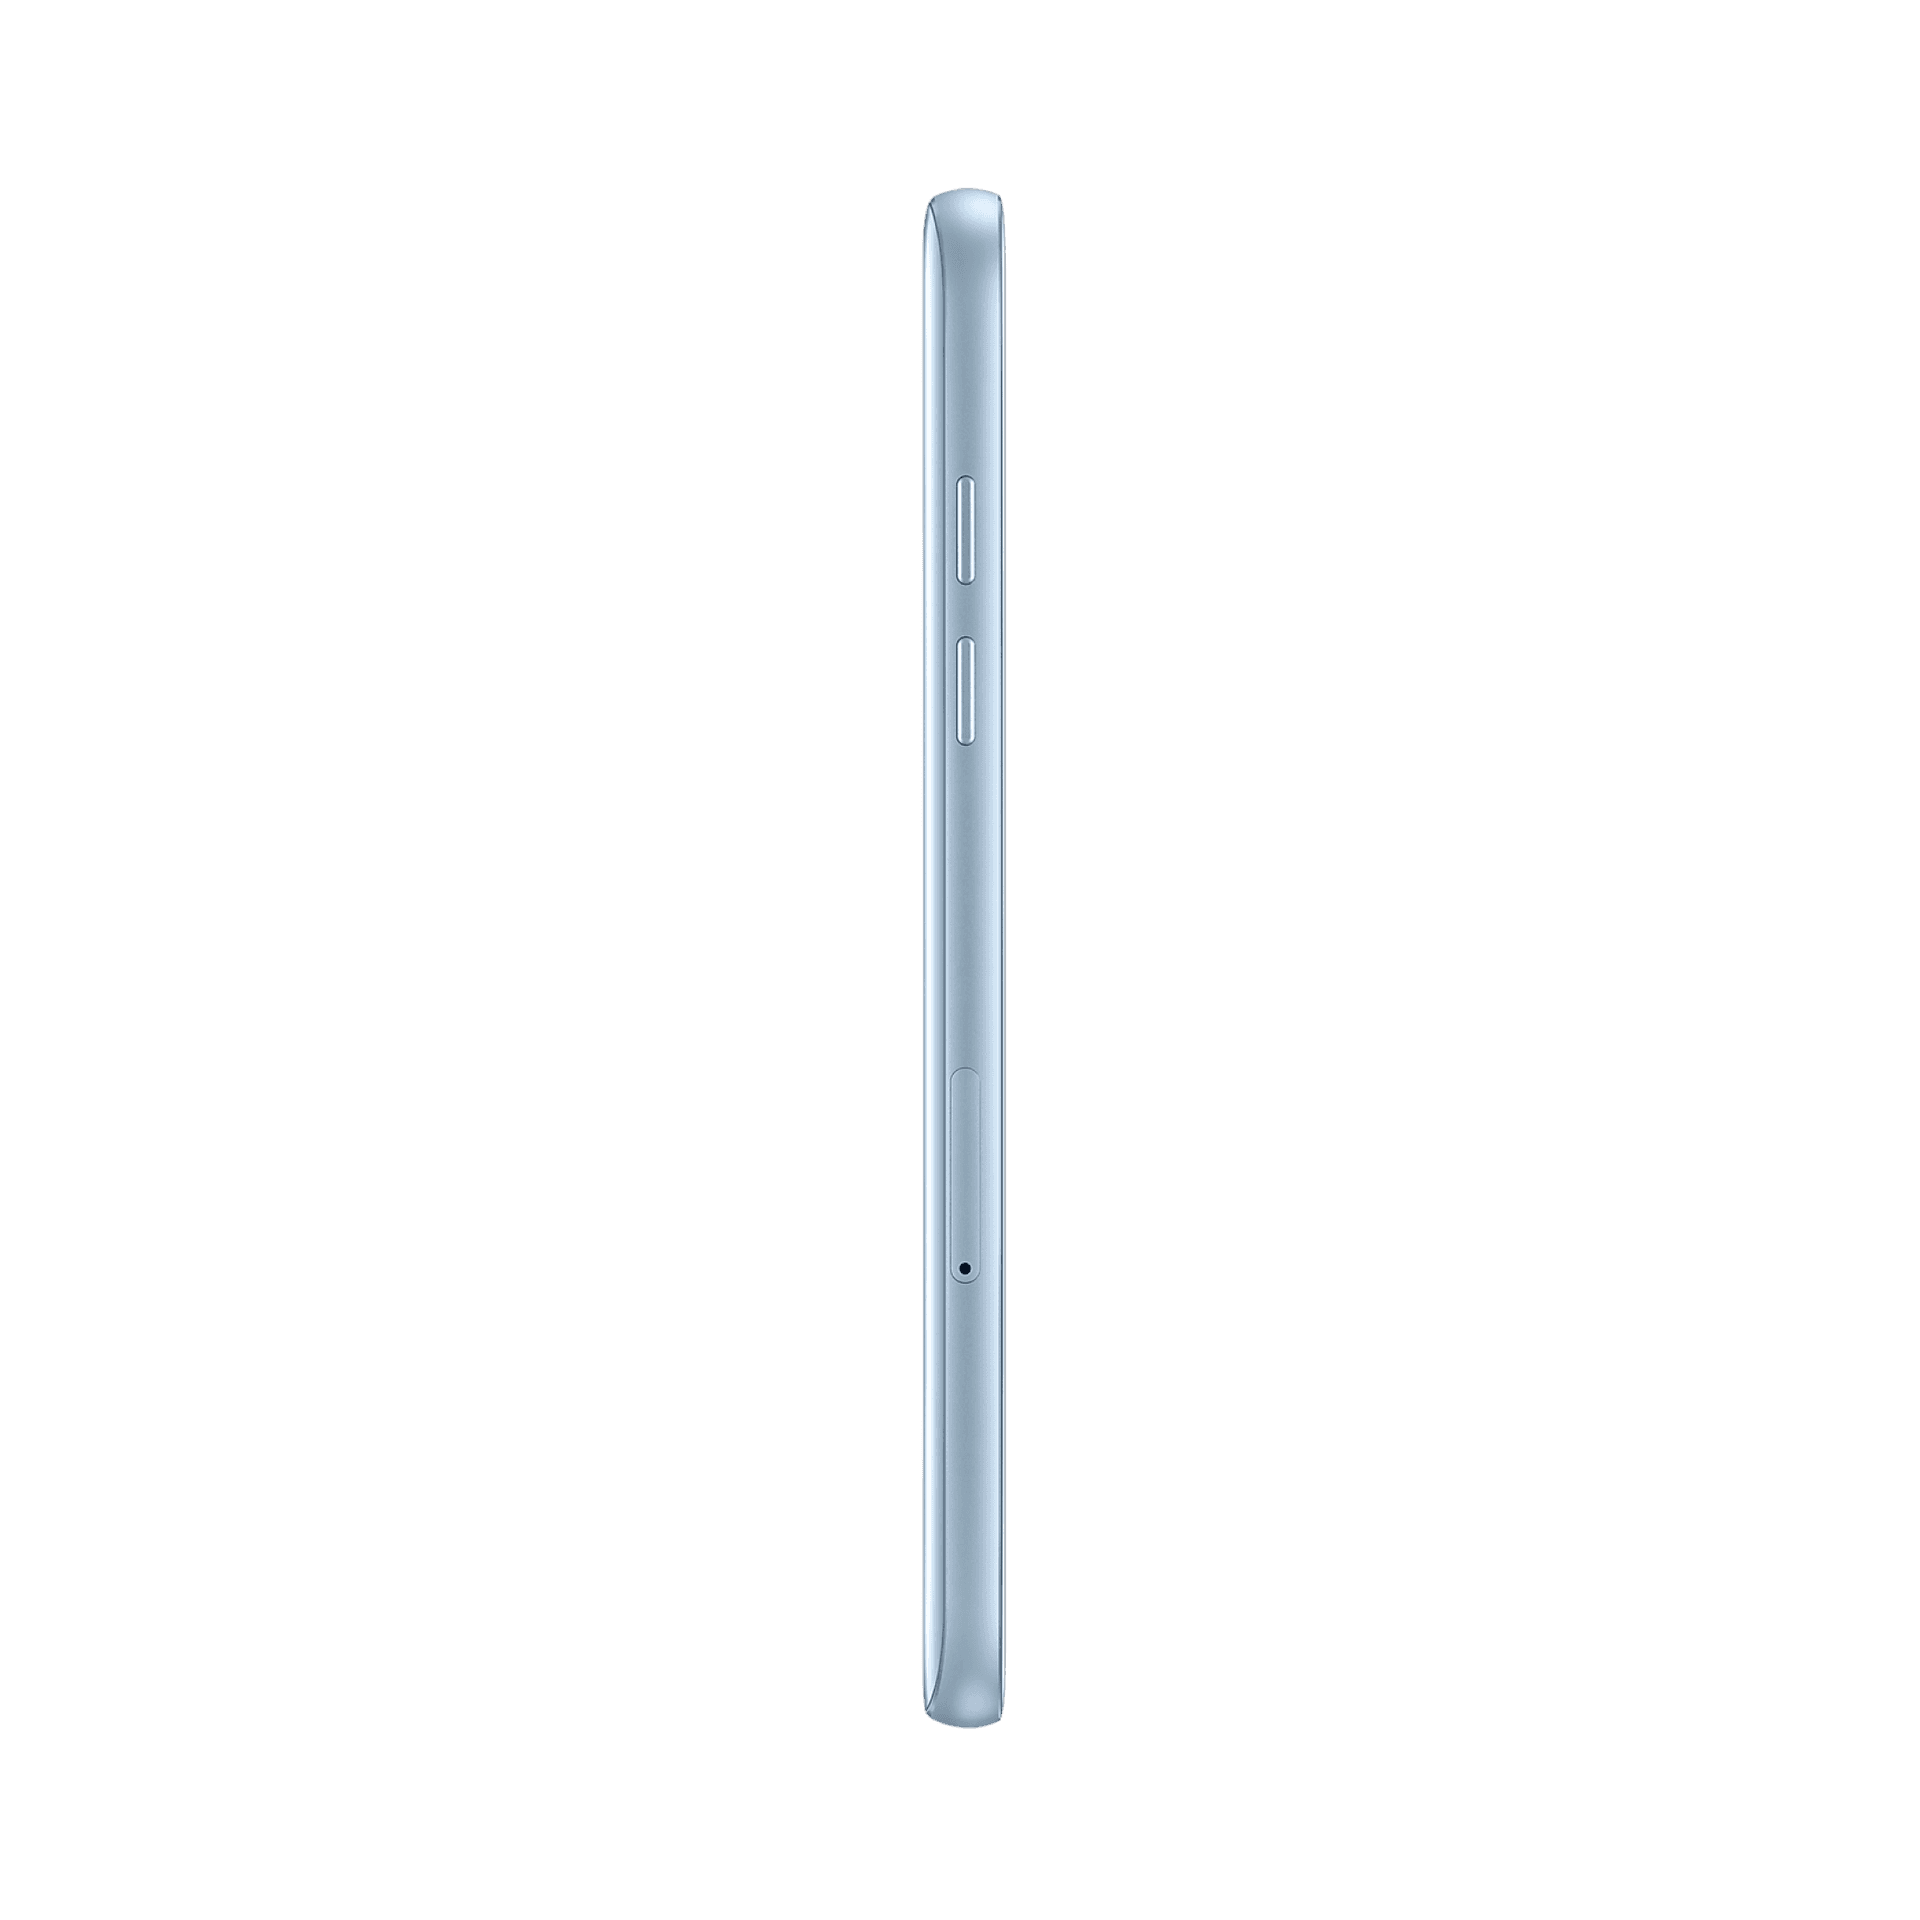 Samsung Galaxy A5 2017 - 32 GB - Mavi Sis